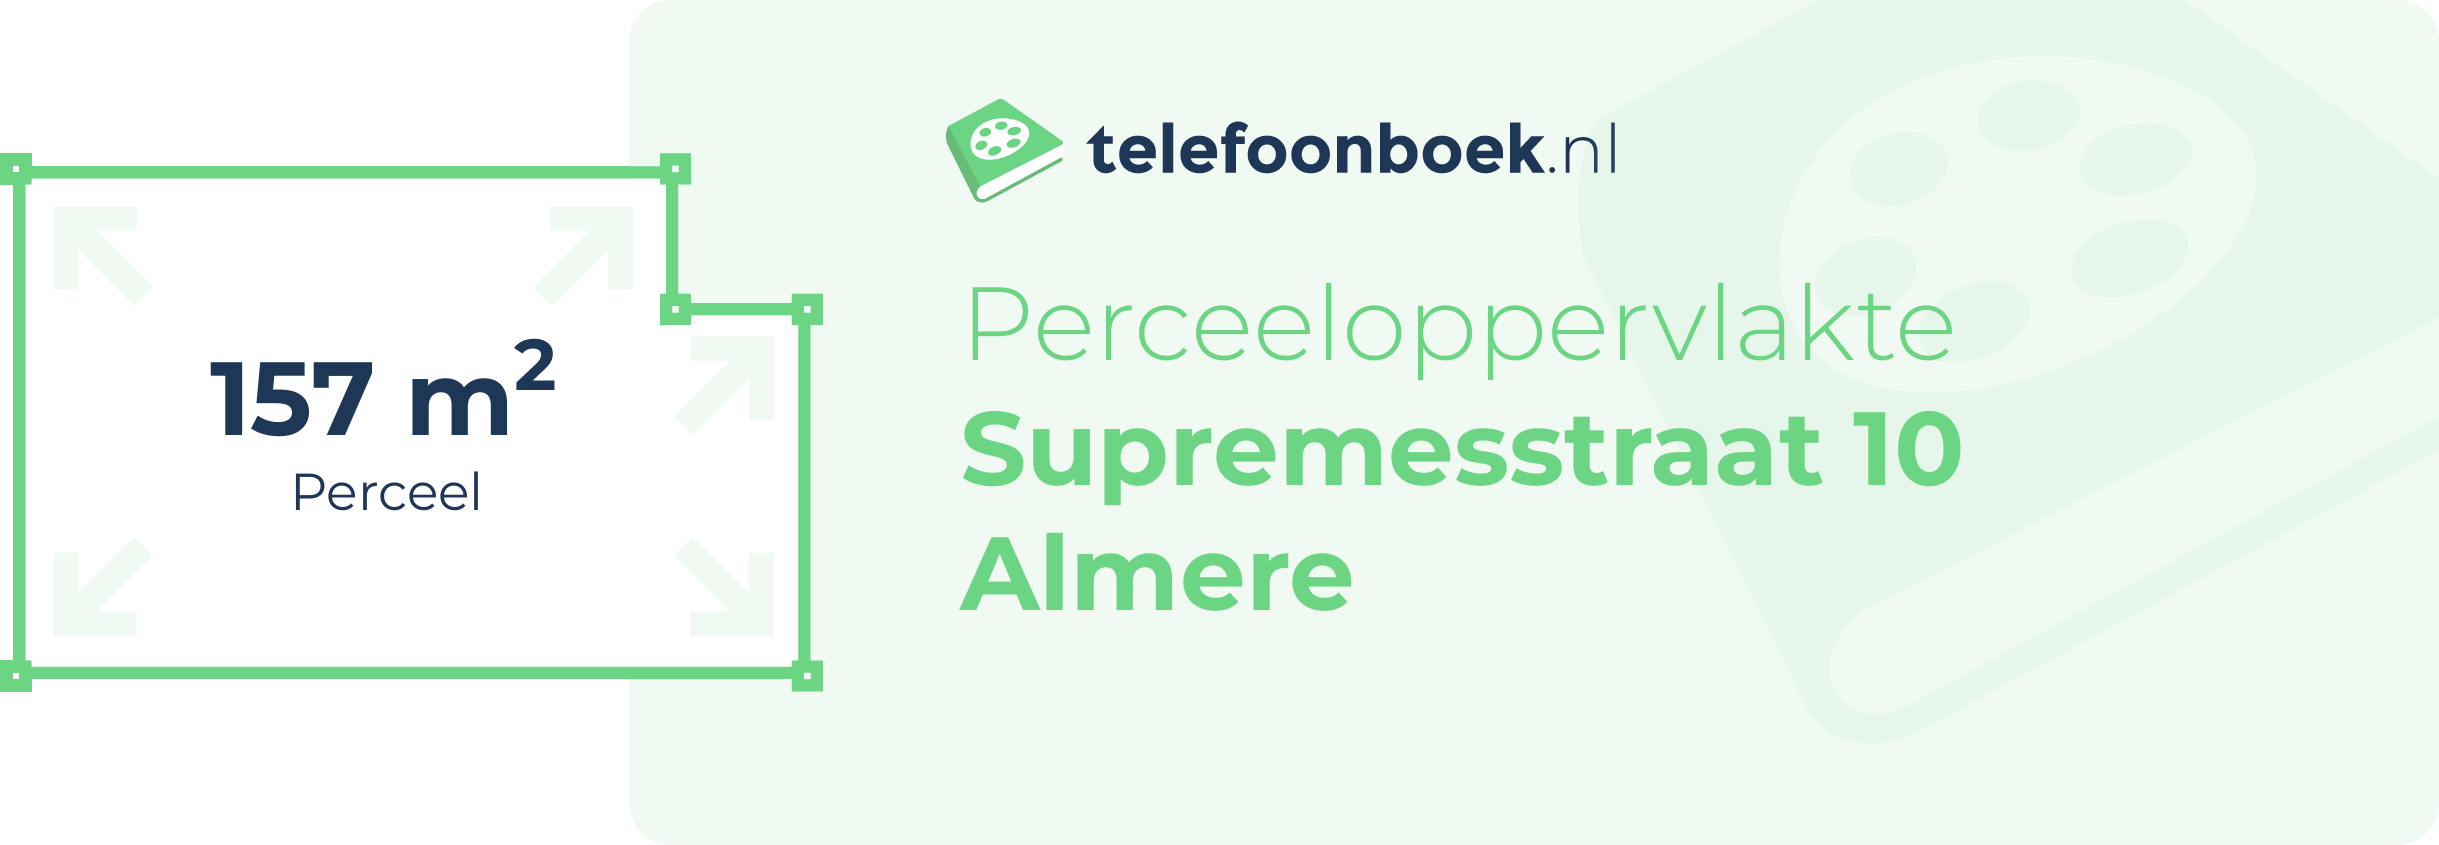 Perceeloppervlakte Supremesstraat 10 Almere